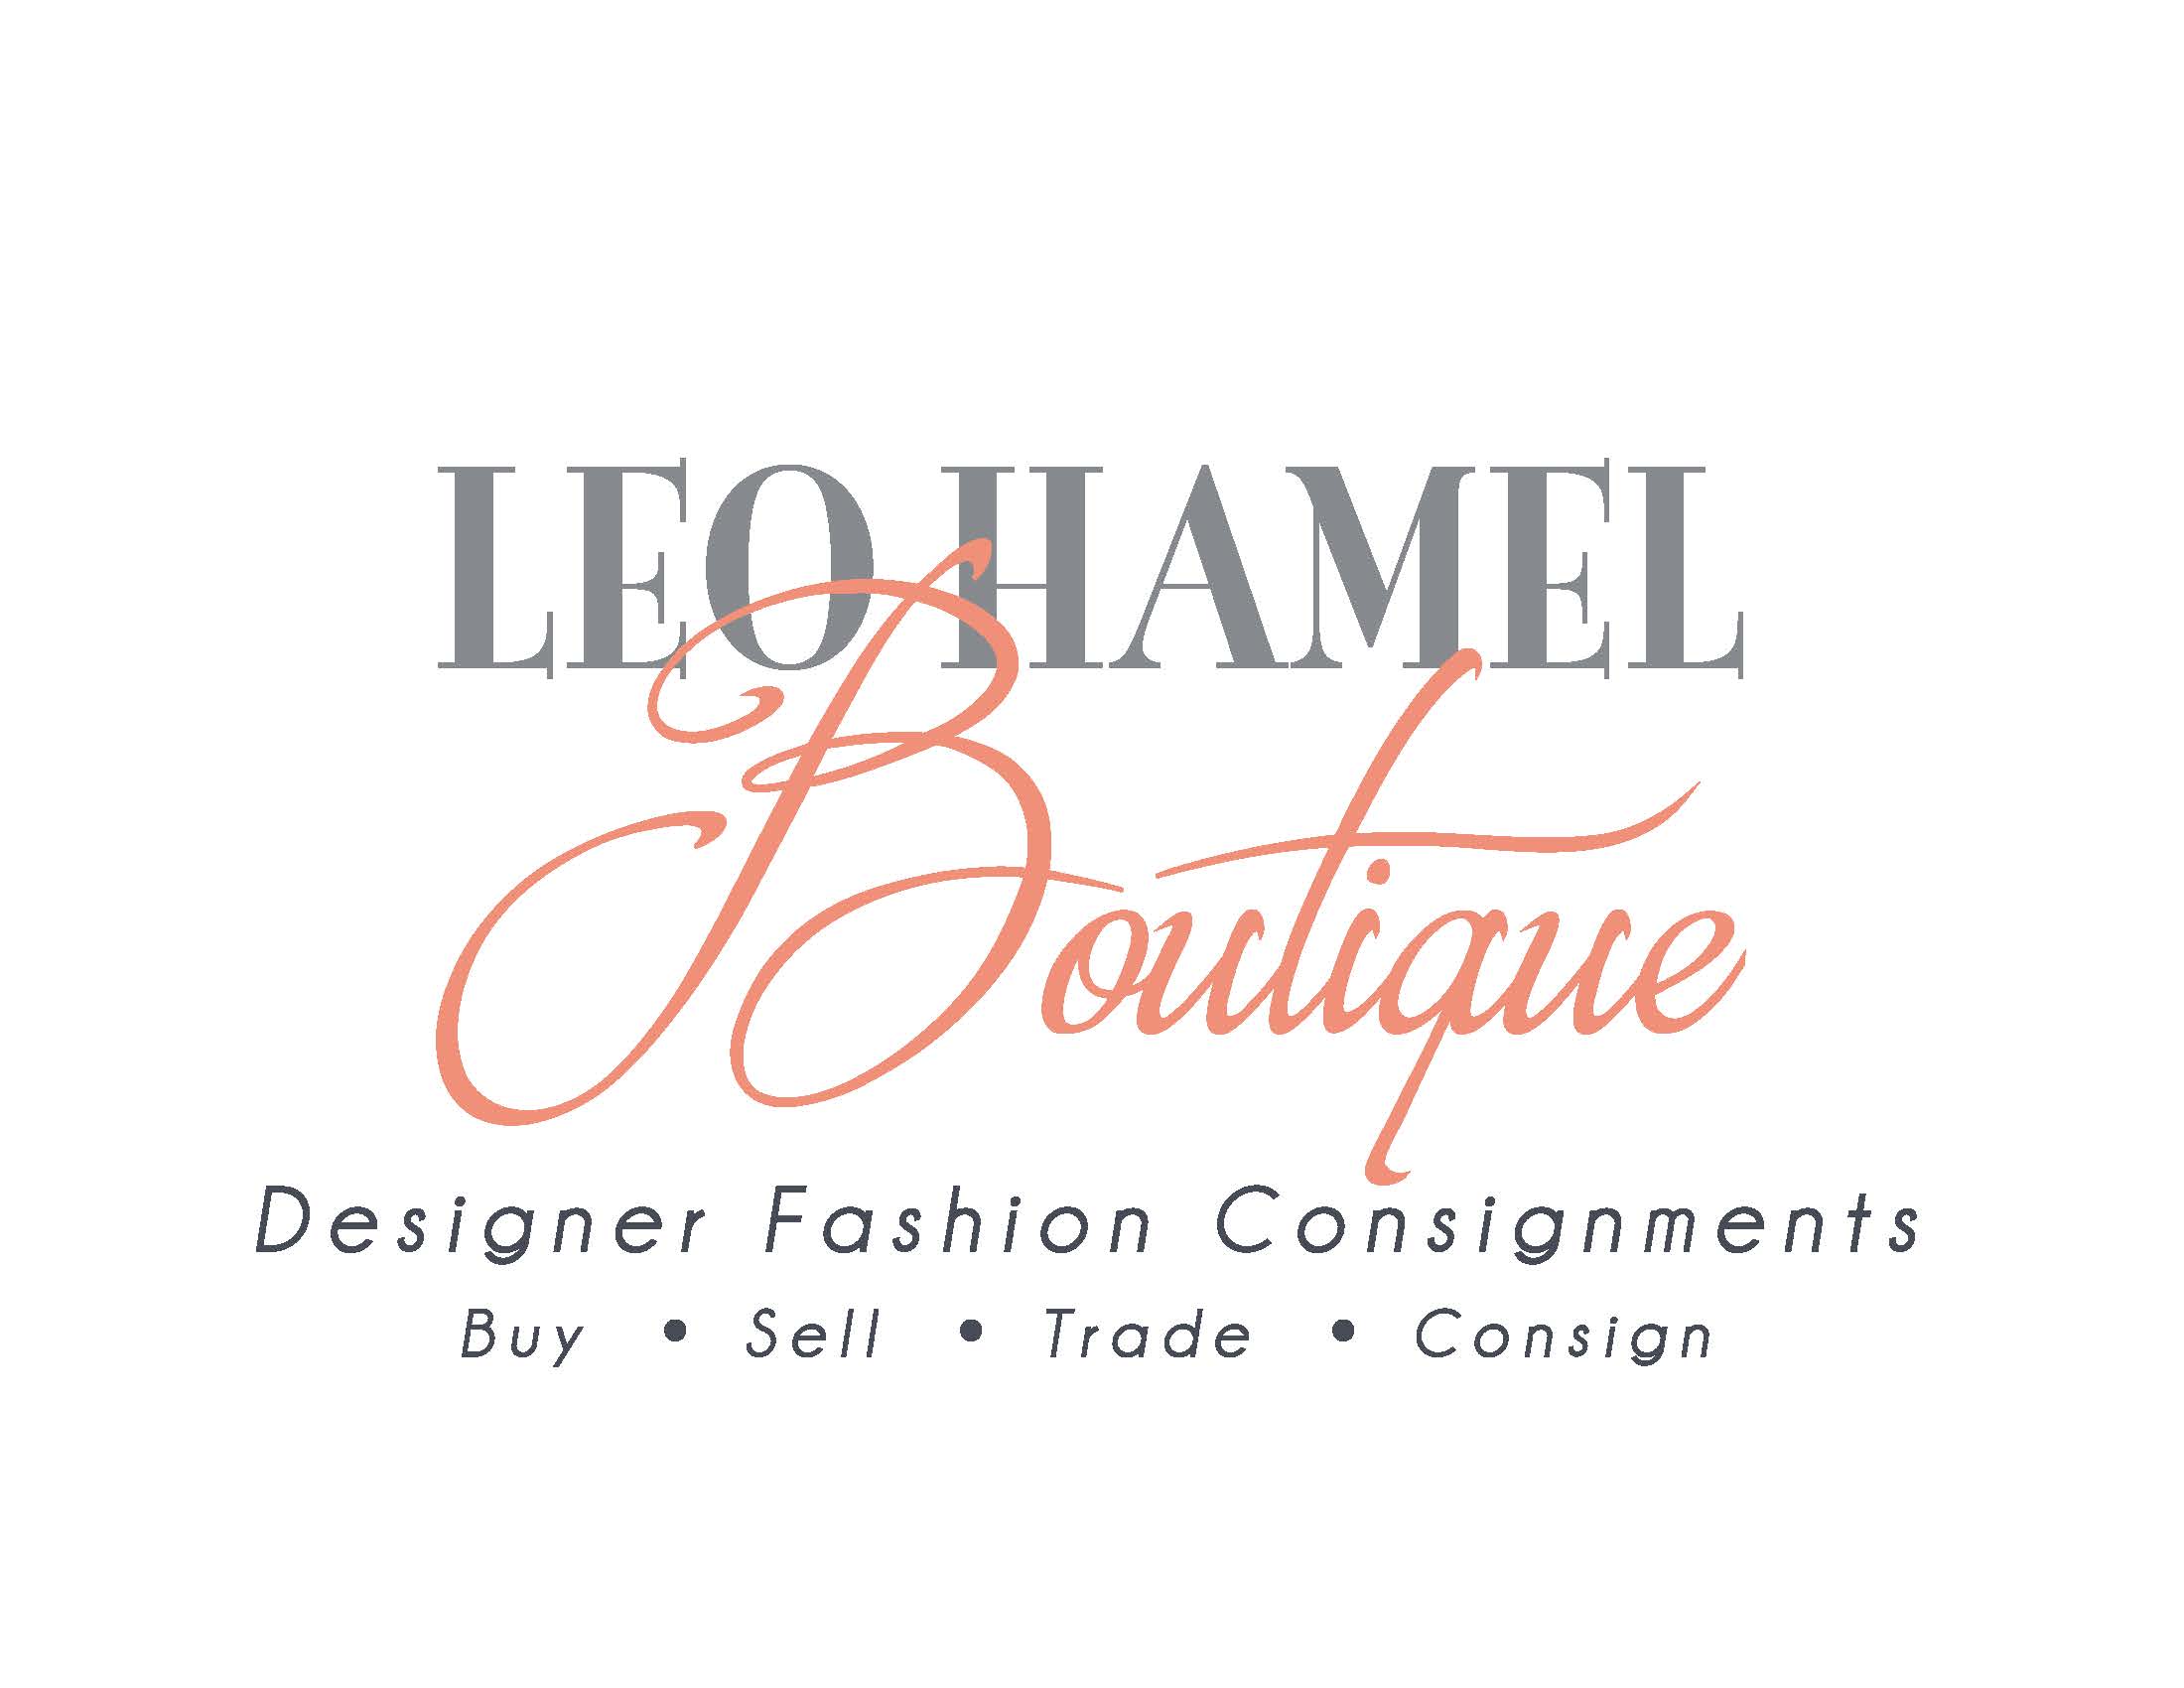 Leo Hamel Boutique & Consignment Shop 619-430-2901 San Diego, CA